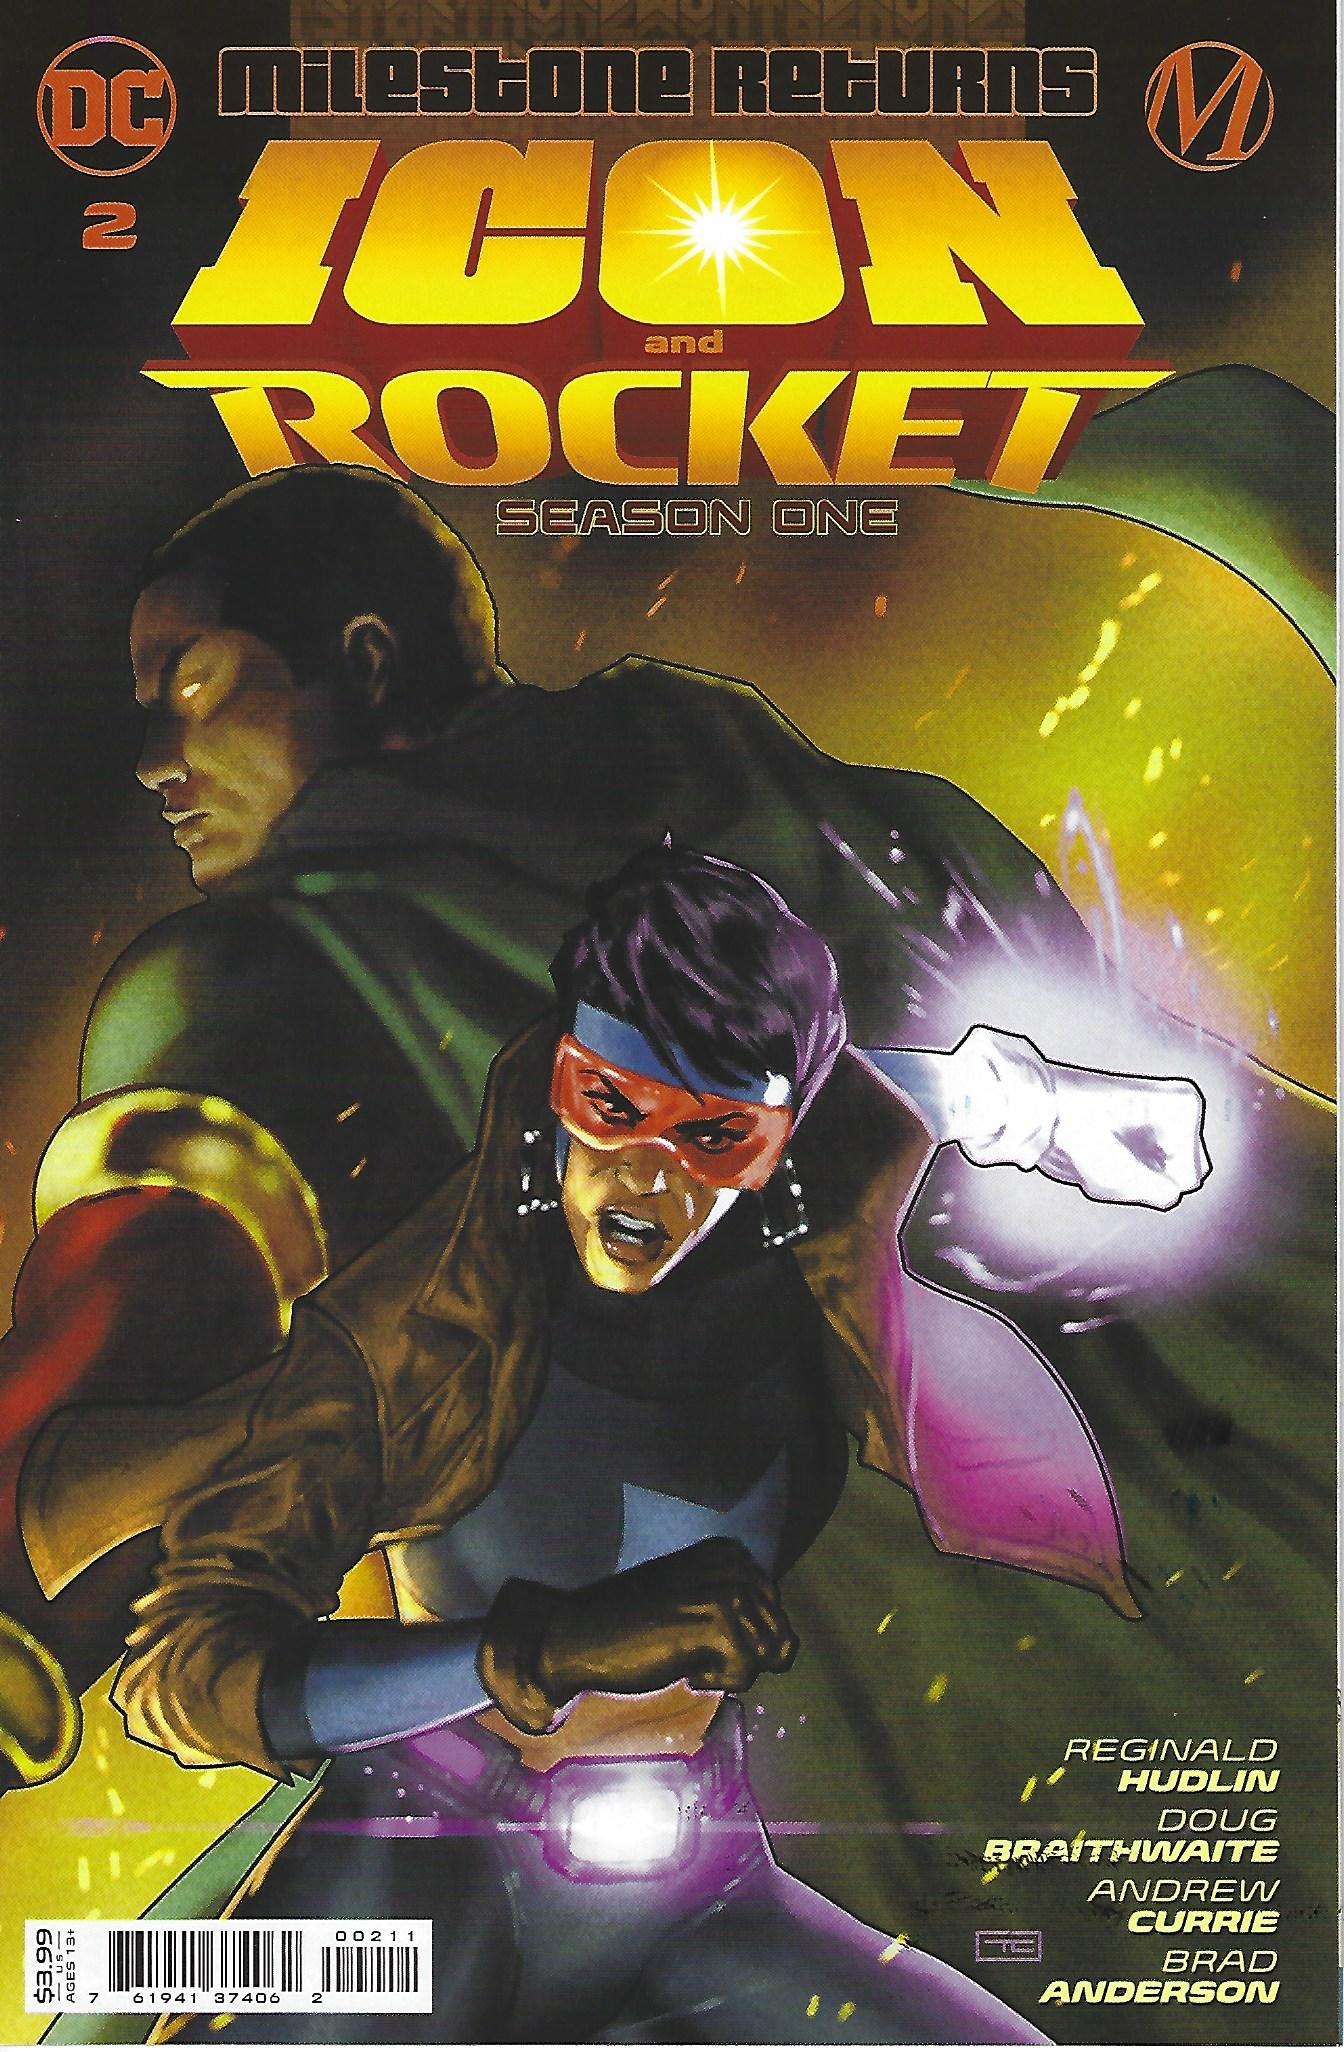 DC & Milestone Comics - Icon & Rocket